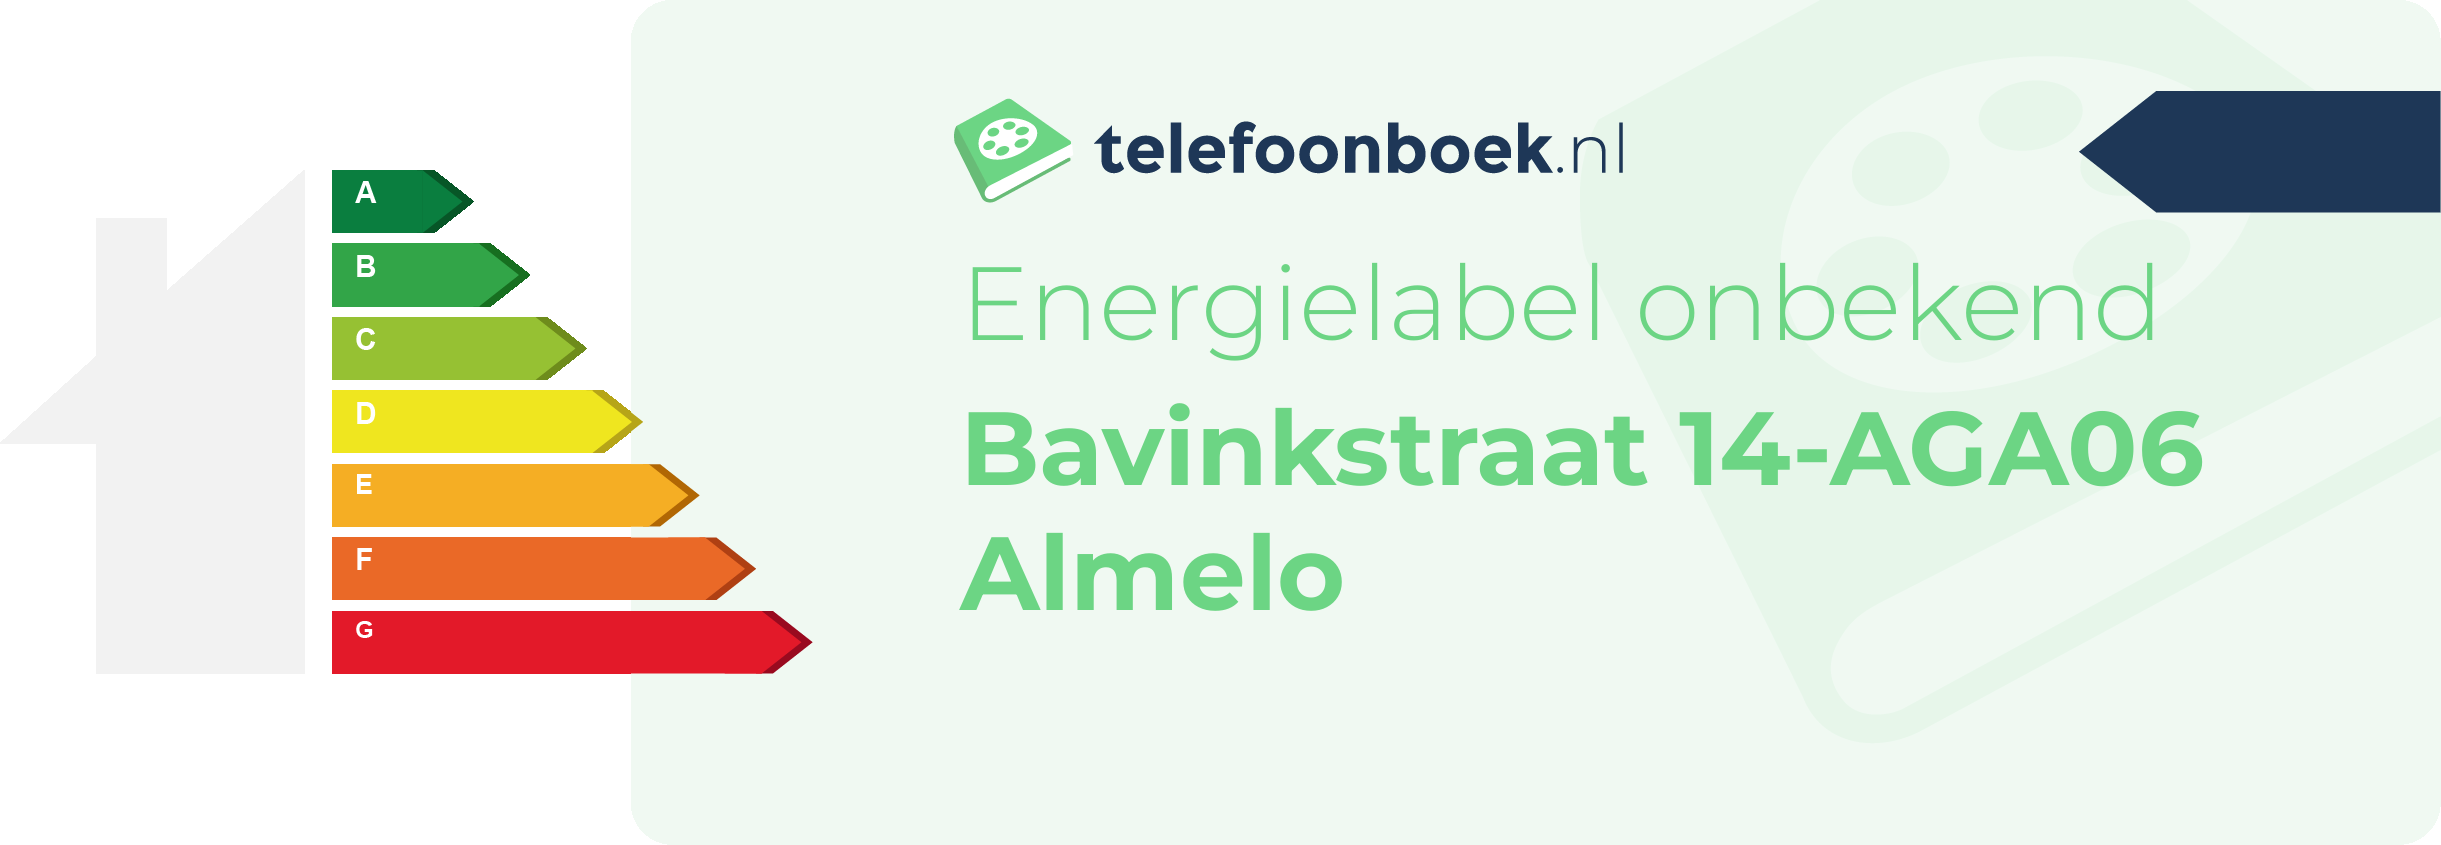 Energielabel Bavinkstraat 14-AGA06 Almelo